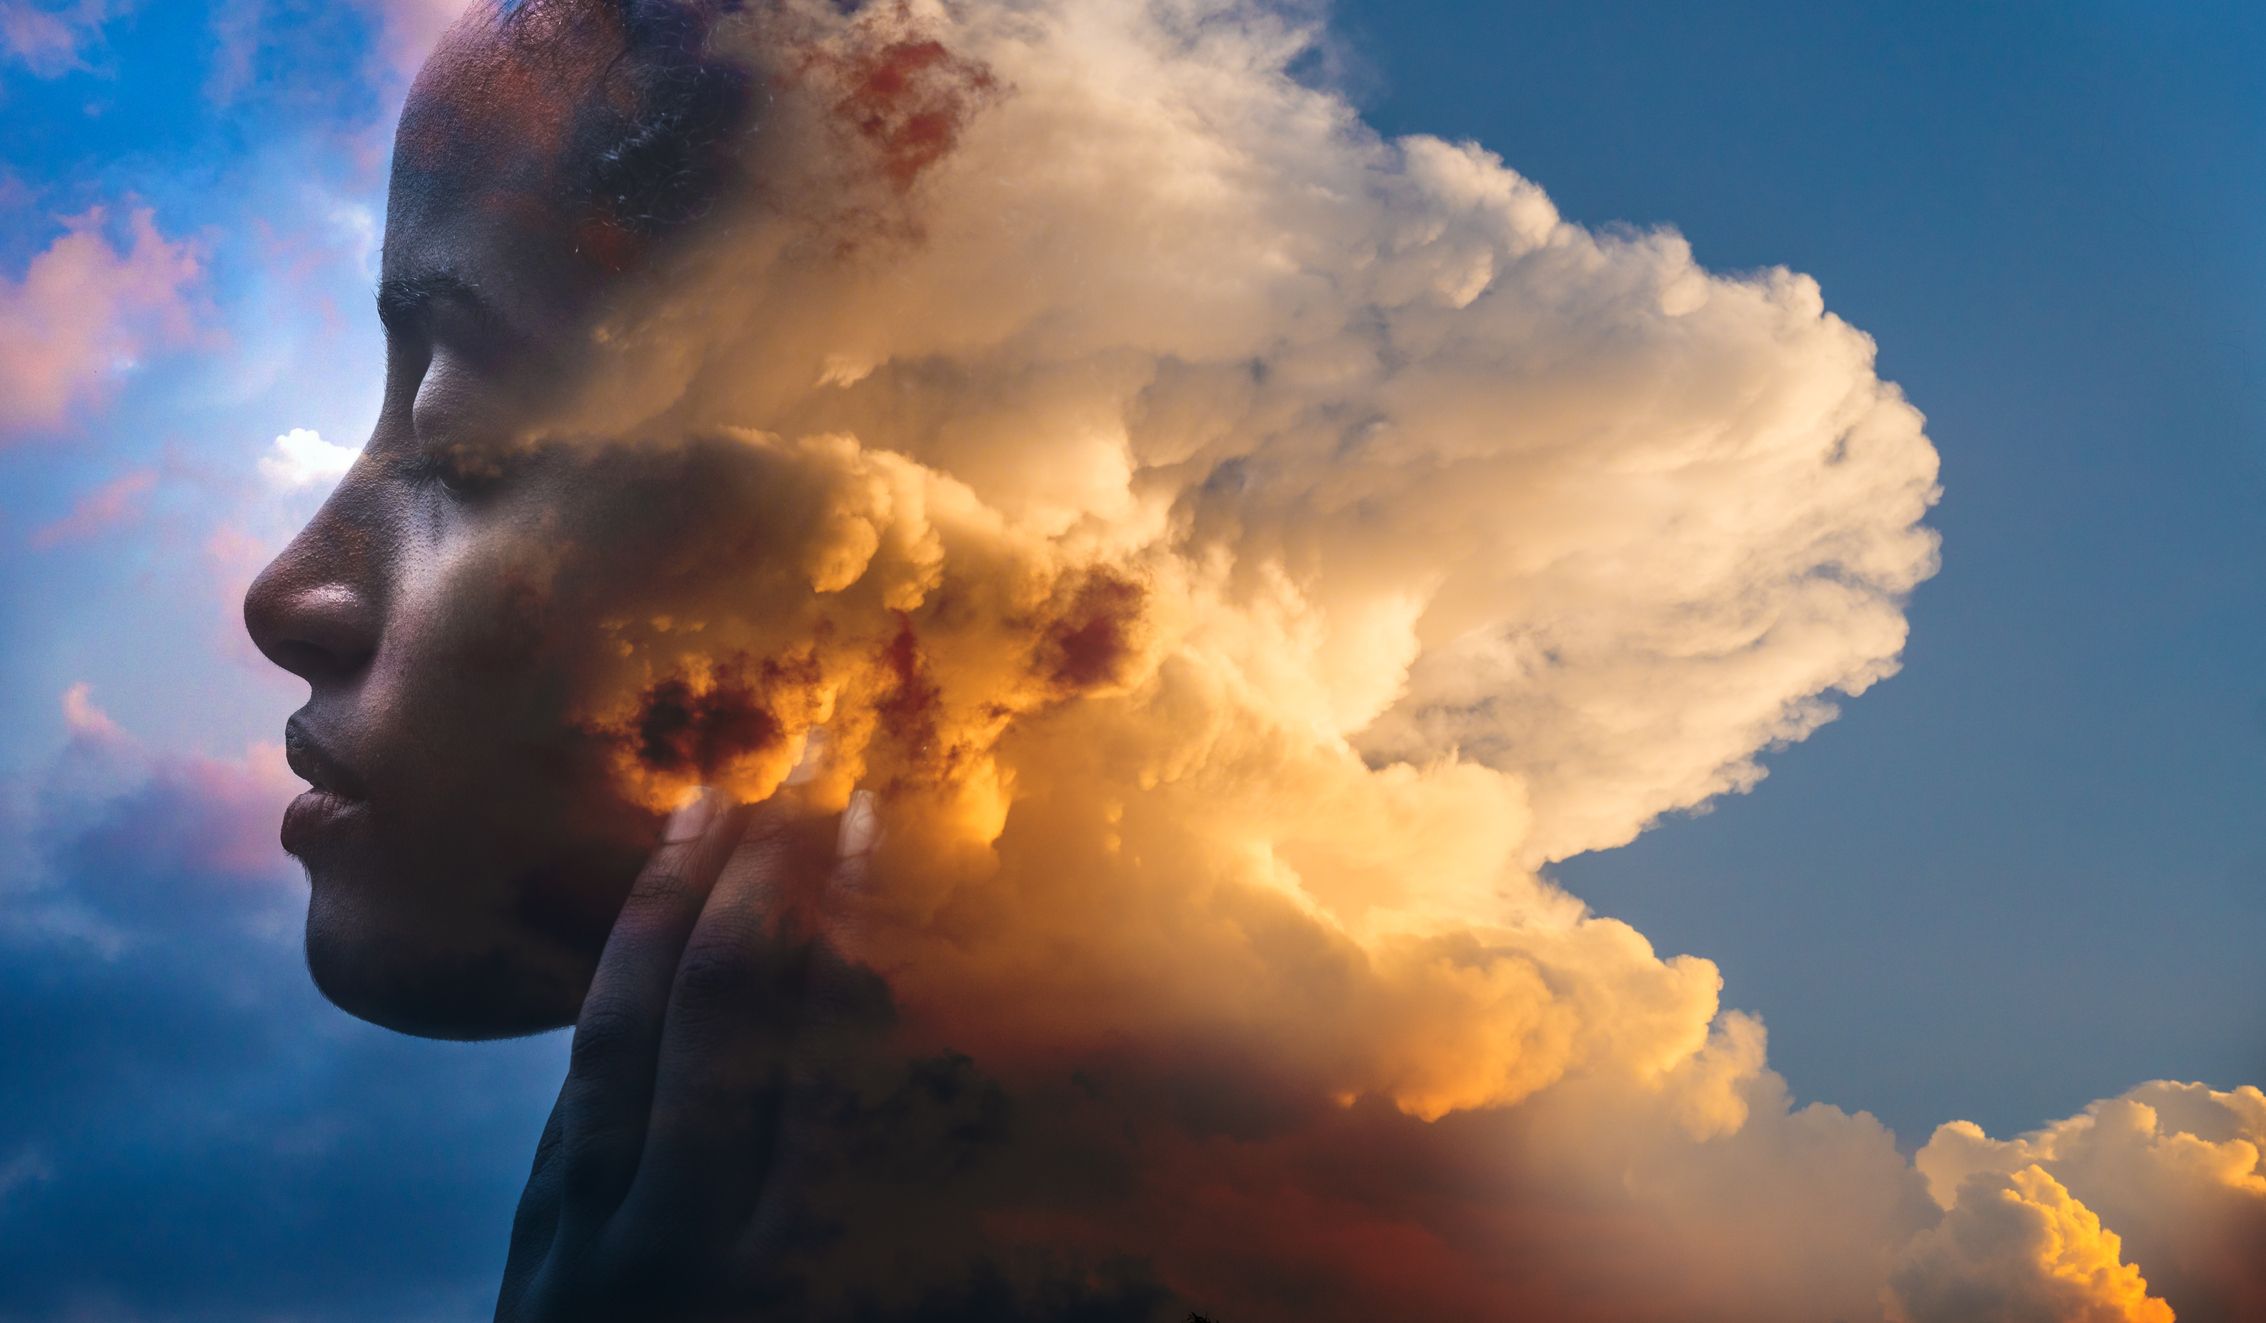 hallucination-dream-cloud-face-sky-stock-getty.jpg